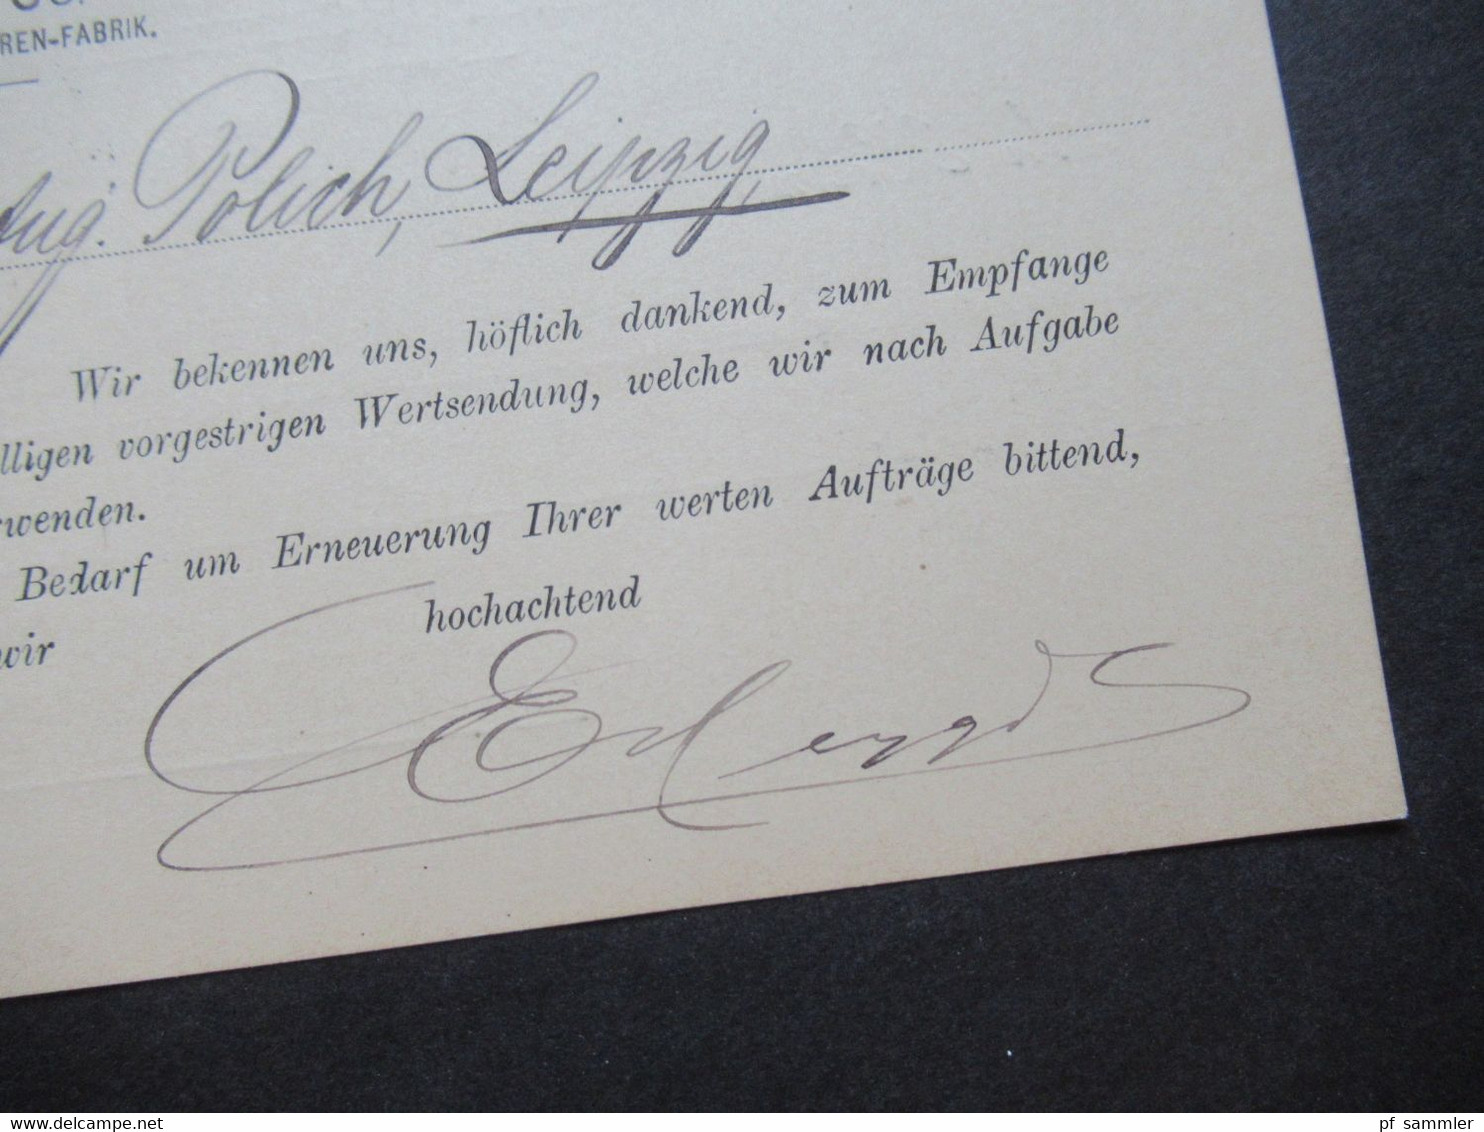 AD Württemberg 1901 Bedruckte PostkarteE. Heyge & Co. Mechanische Tricotwaren Fabrik  Empfang Der Wertsendung - Storia Postale